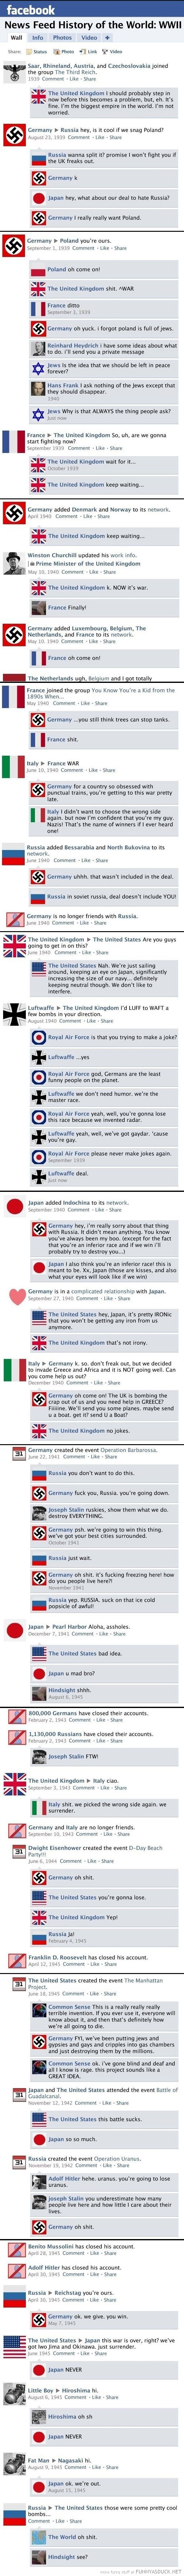 Facebook During World War 2